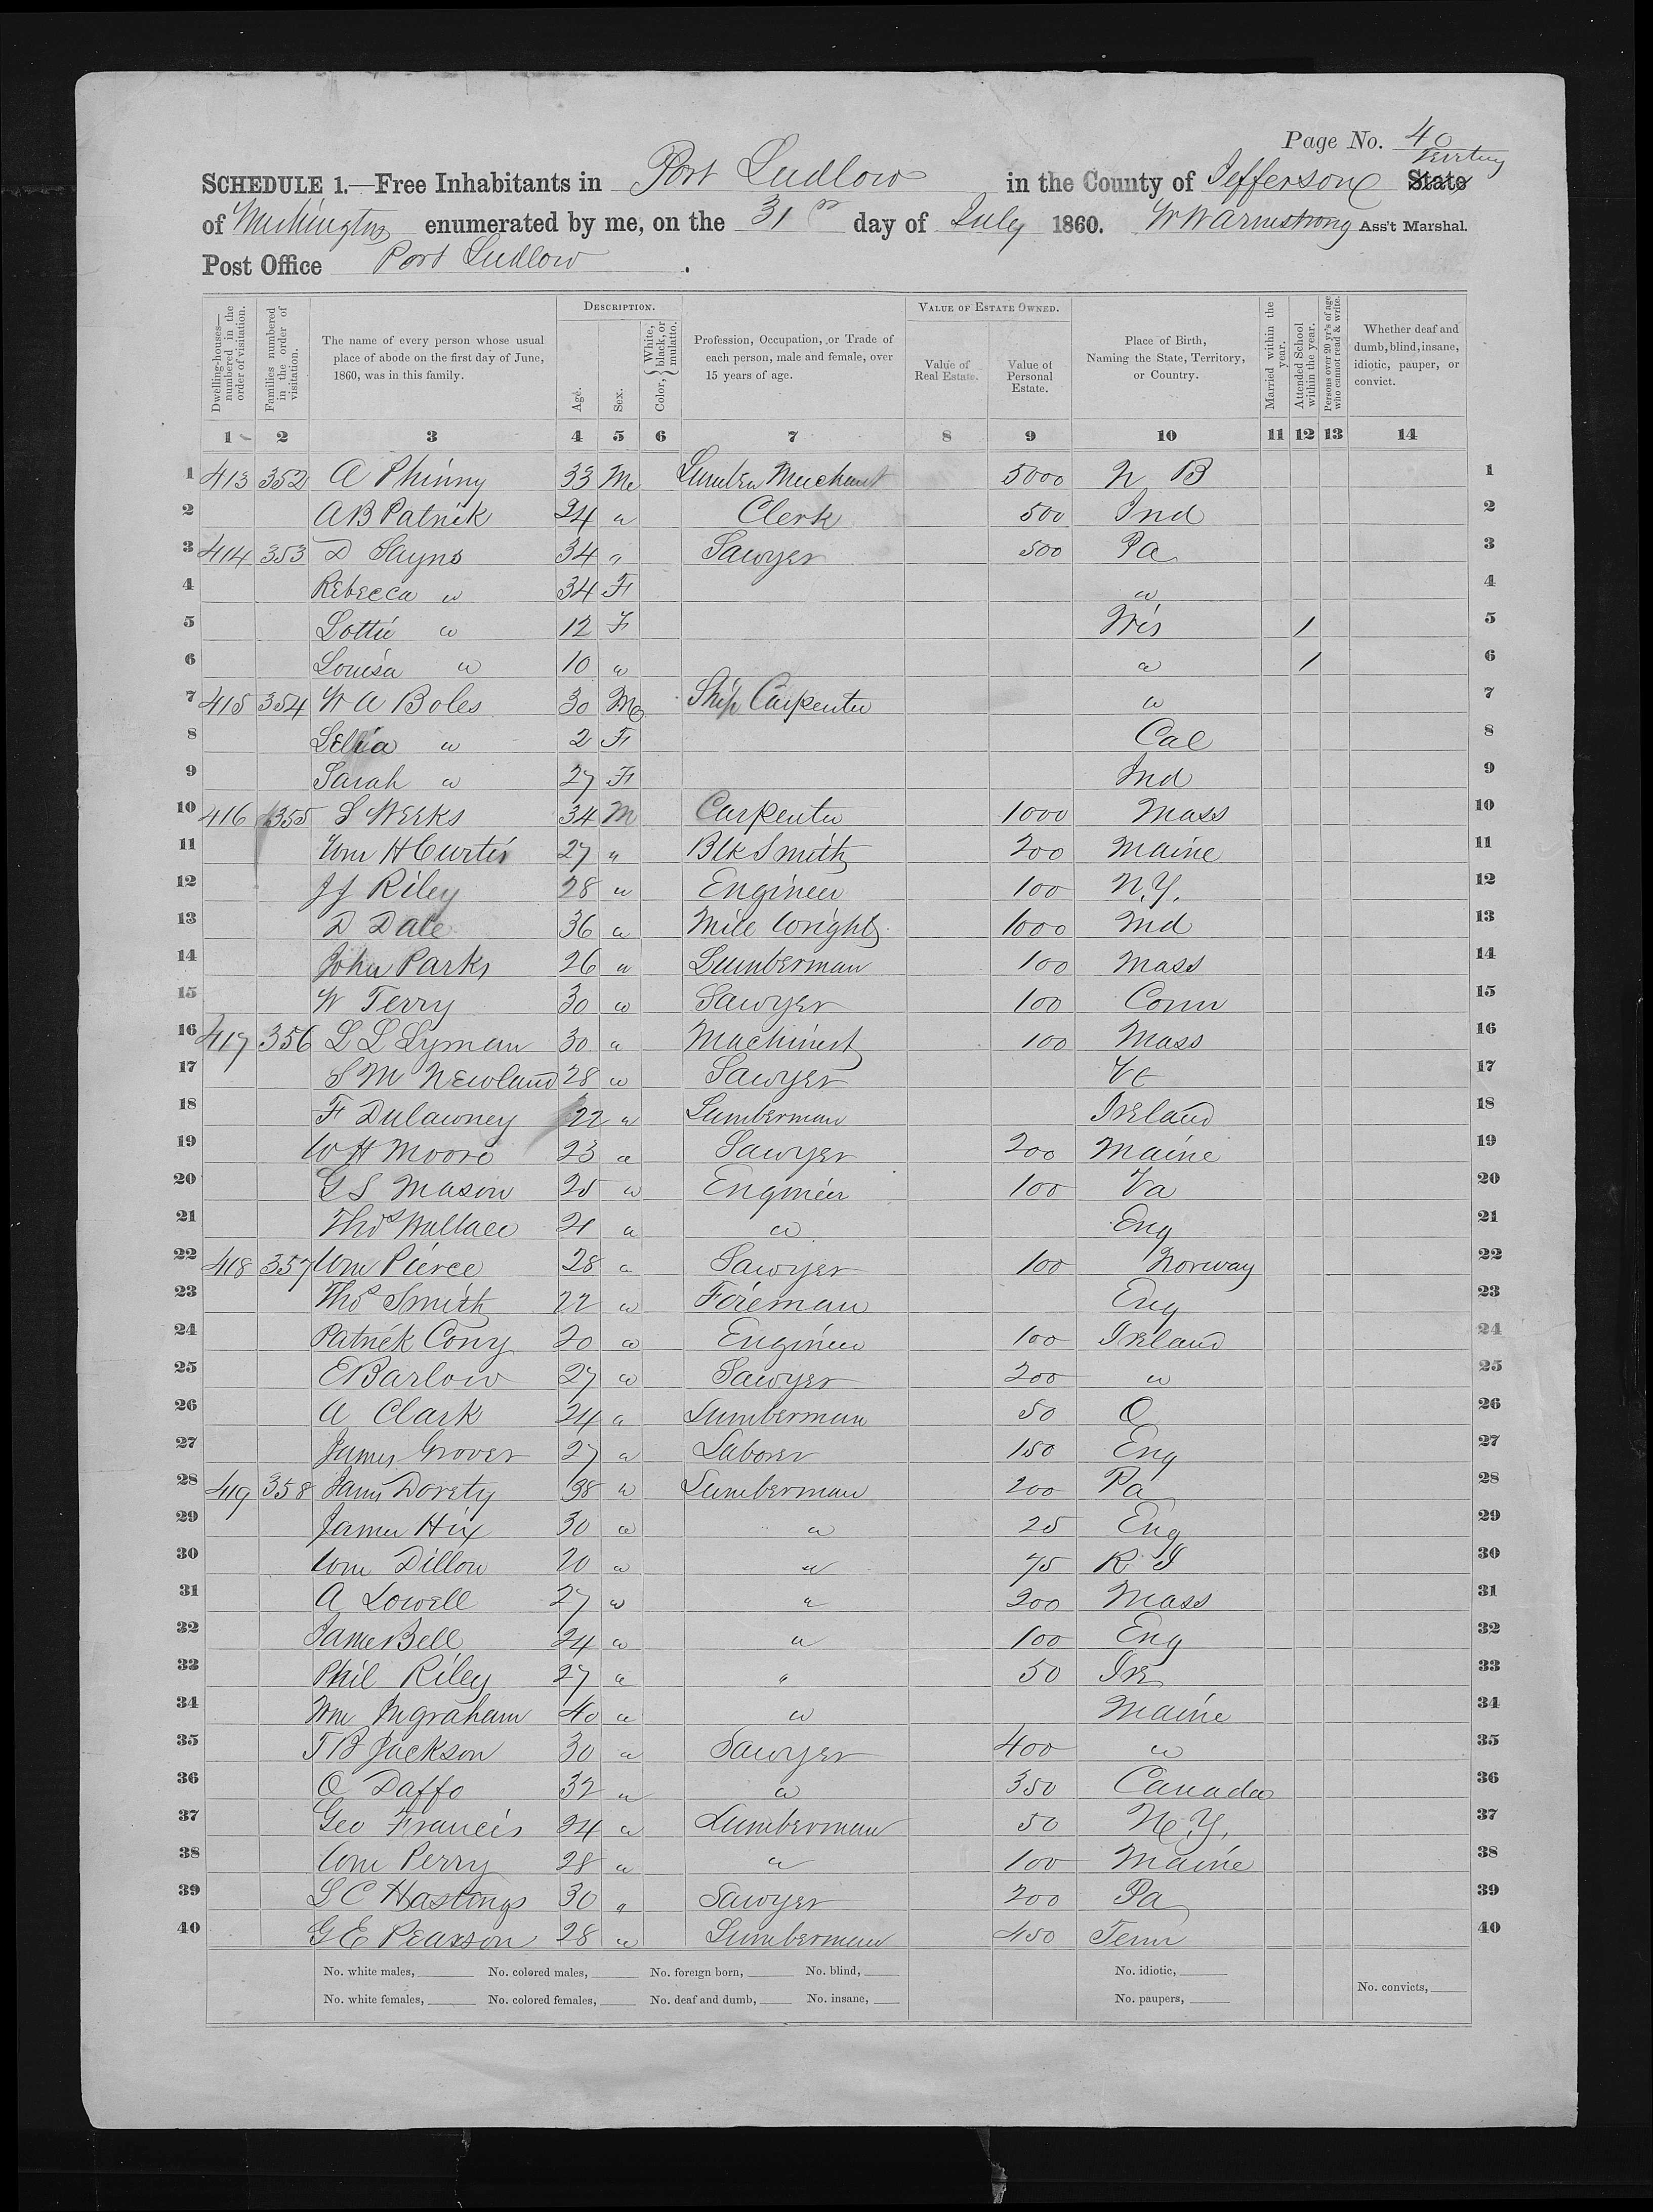 Washington Censuses & Substitute Name Lists, 1850-2015 - Washington State - PDF eBook: